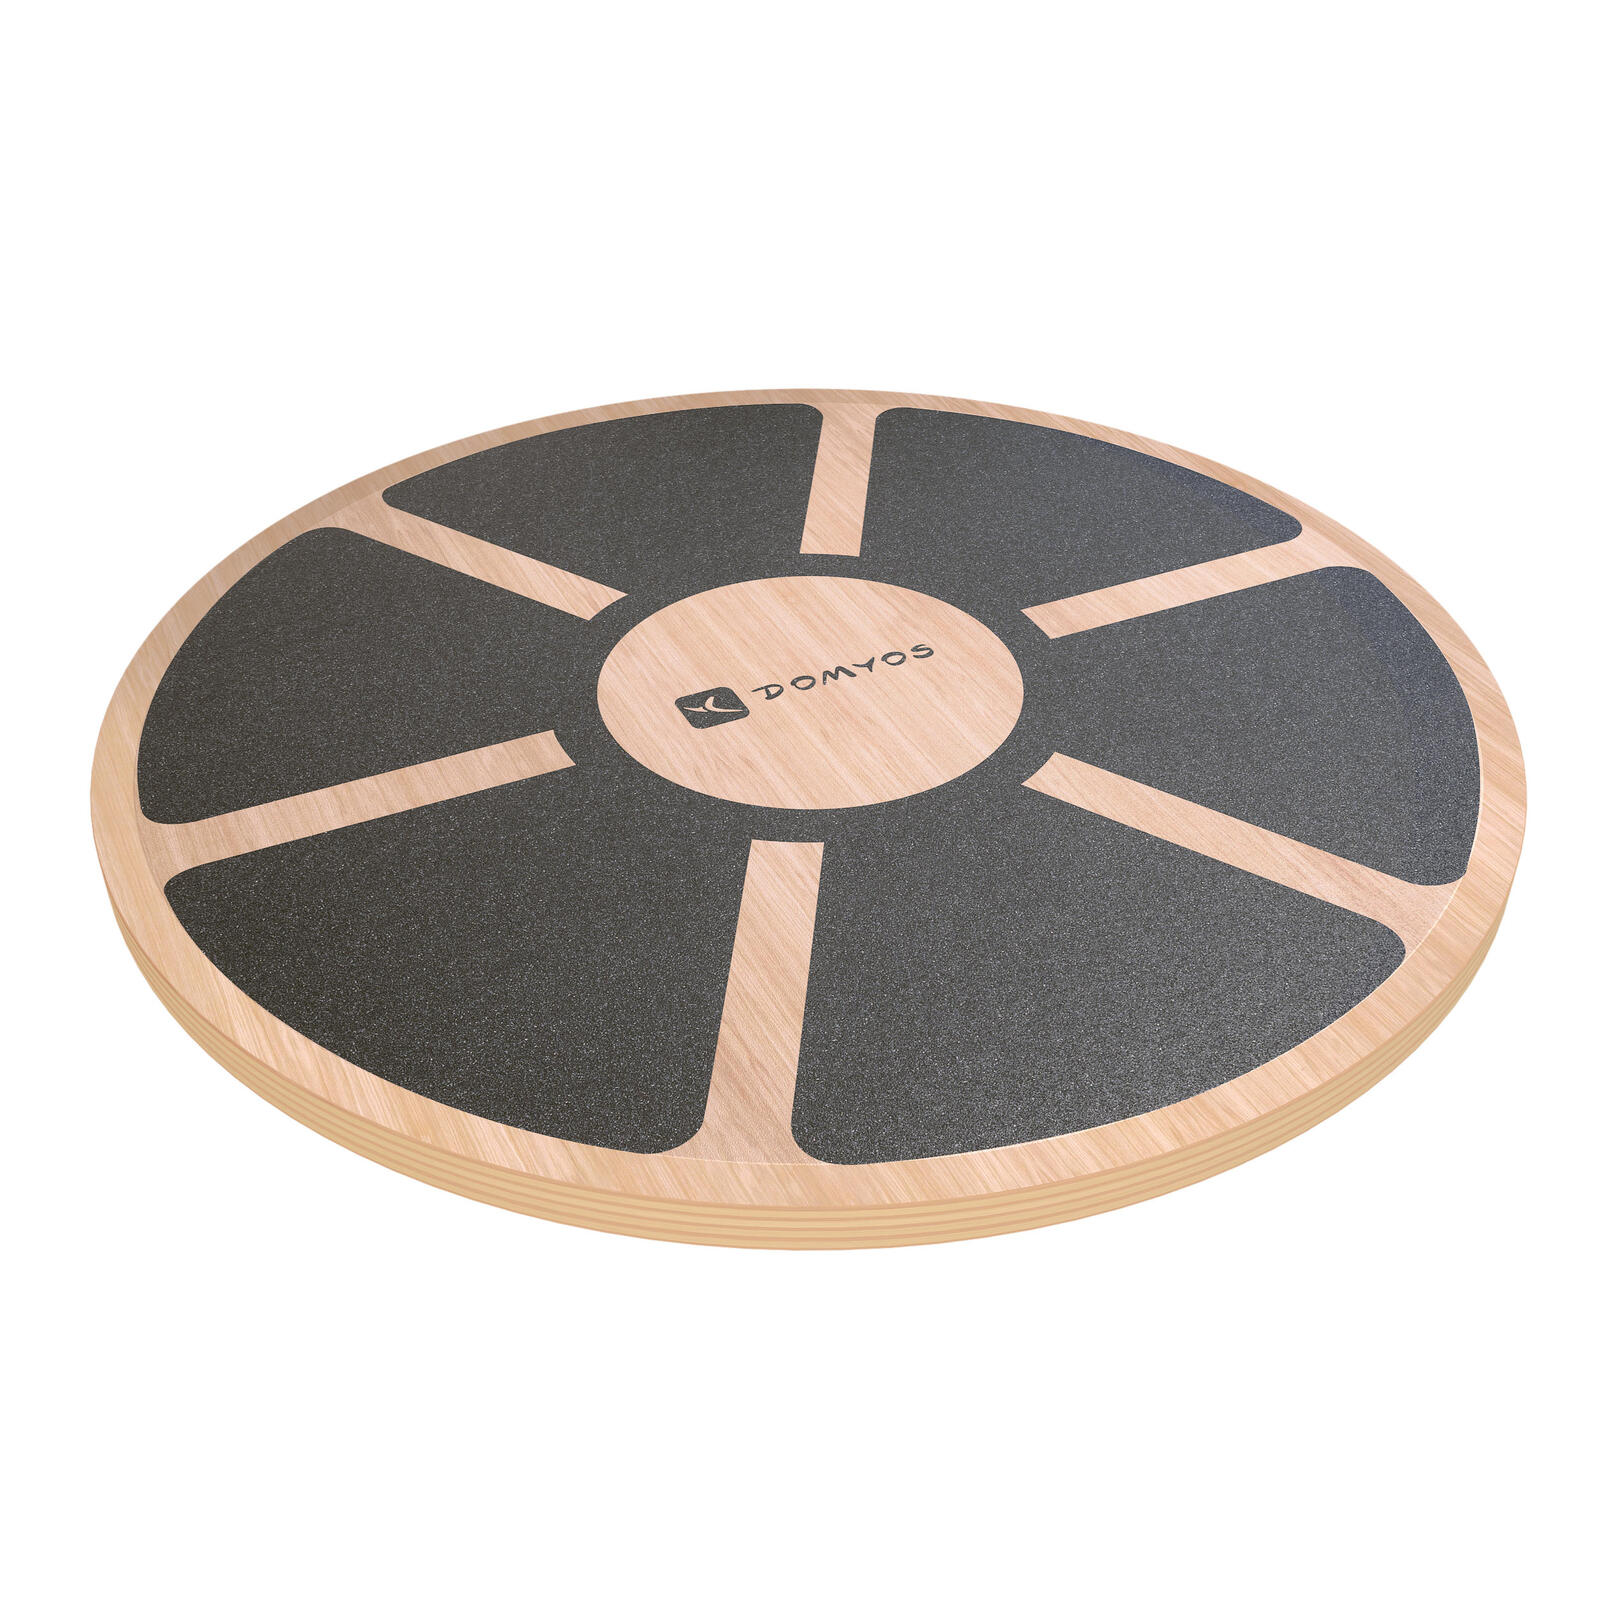 Fitness wooden balance board diameter 39.5 cm height 7.5 cm